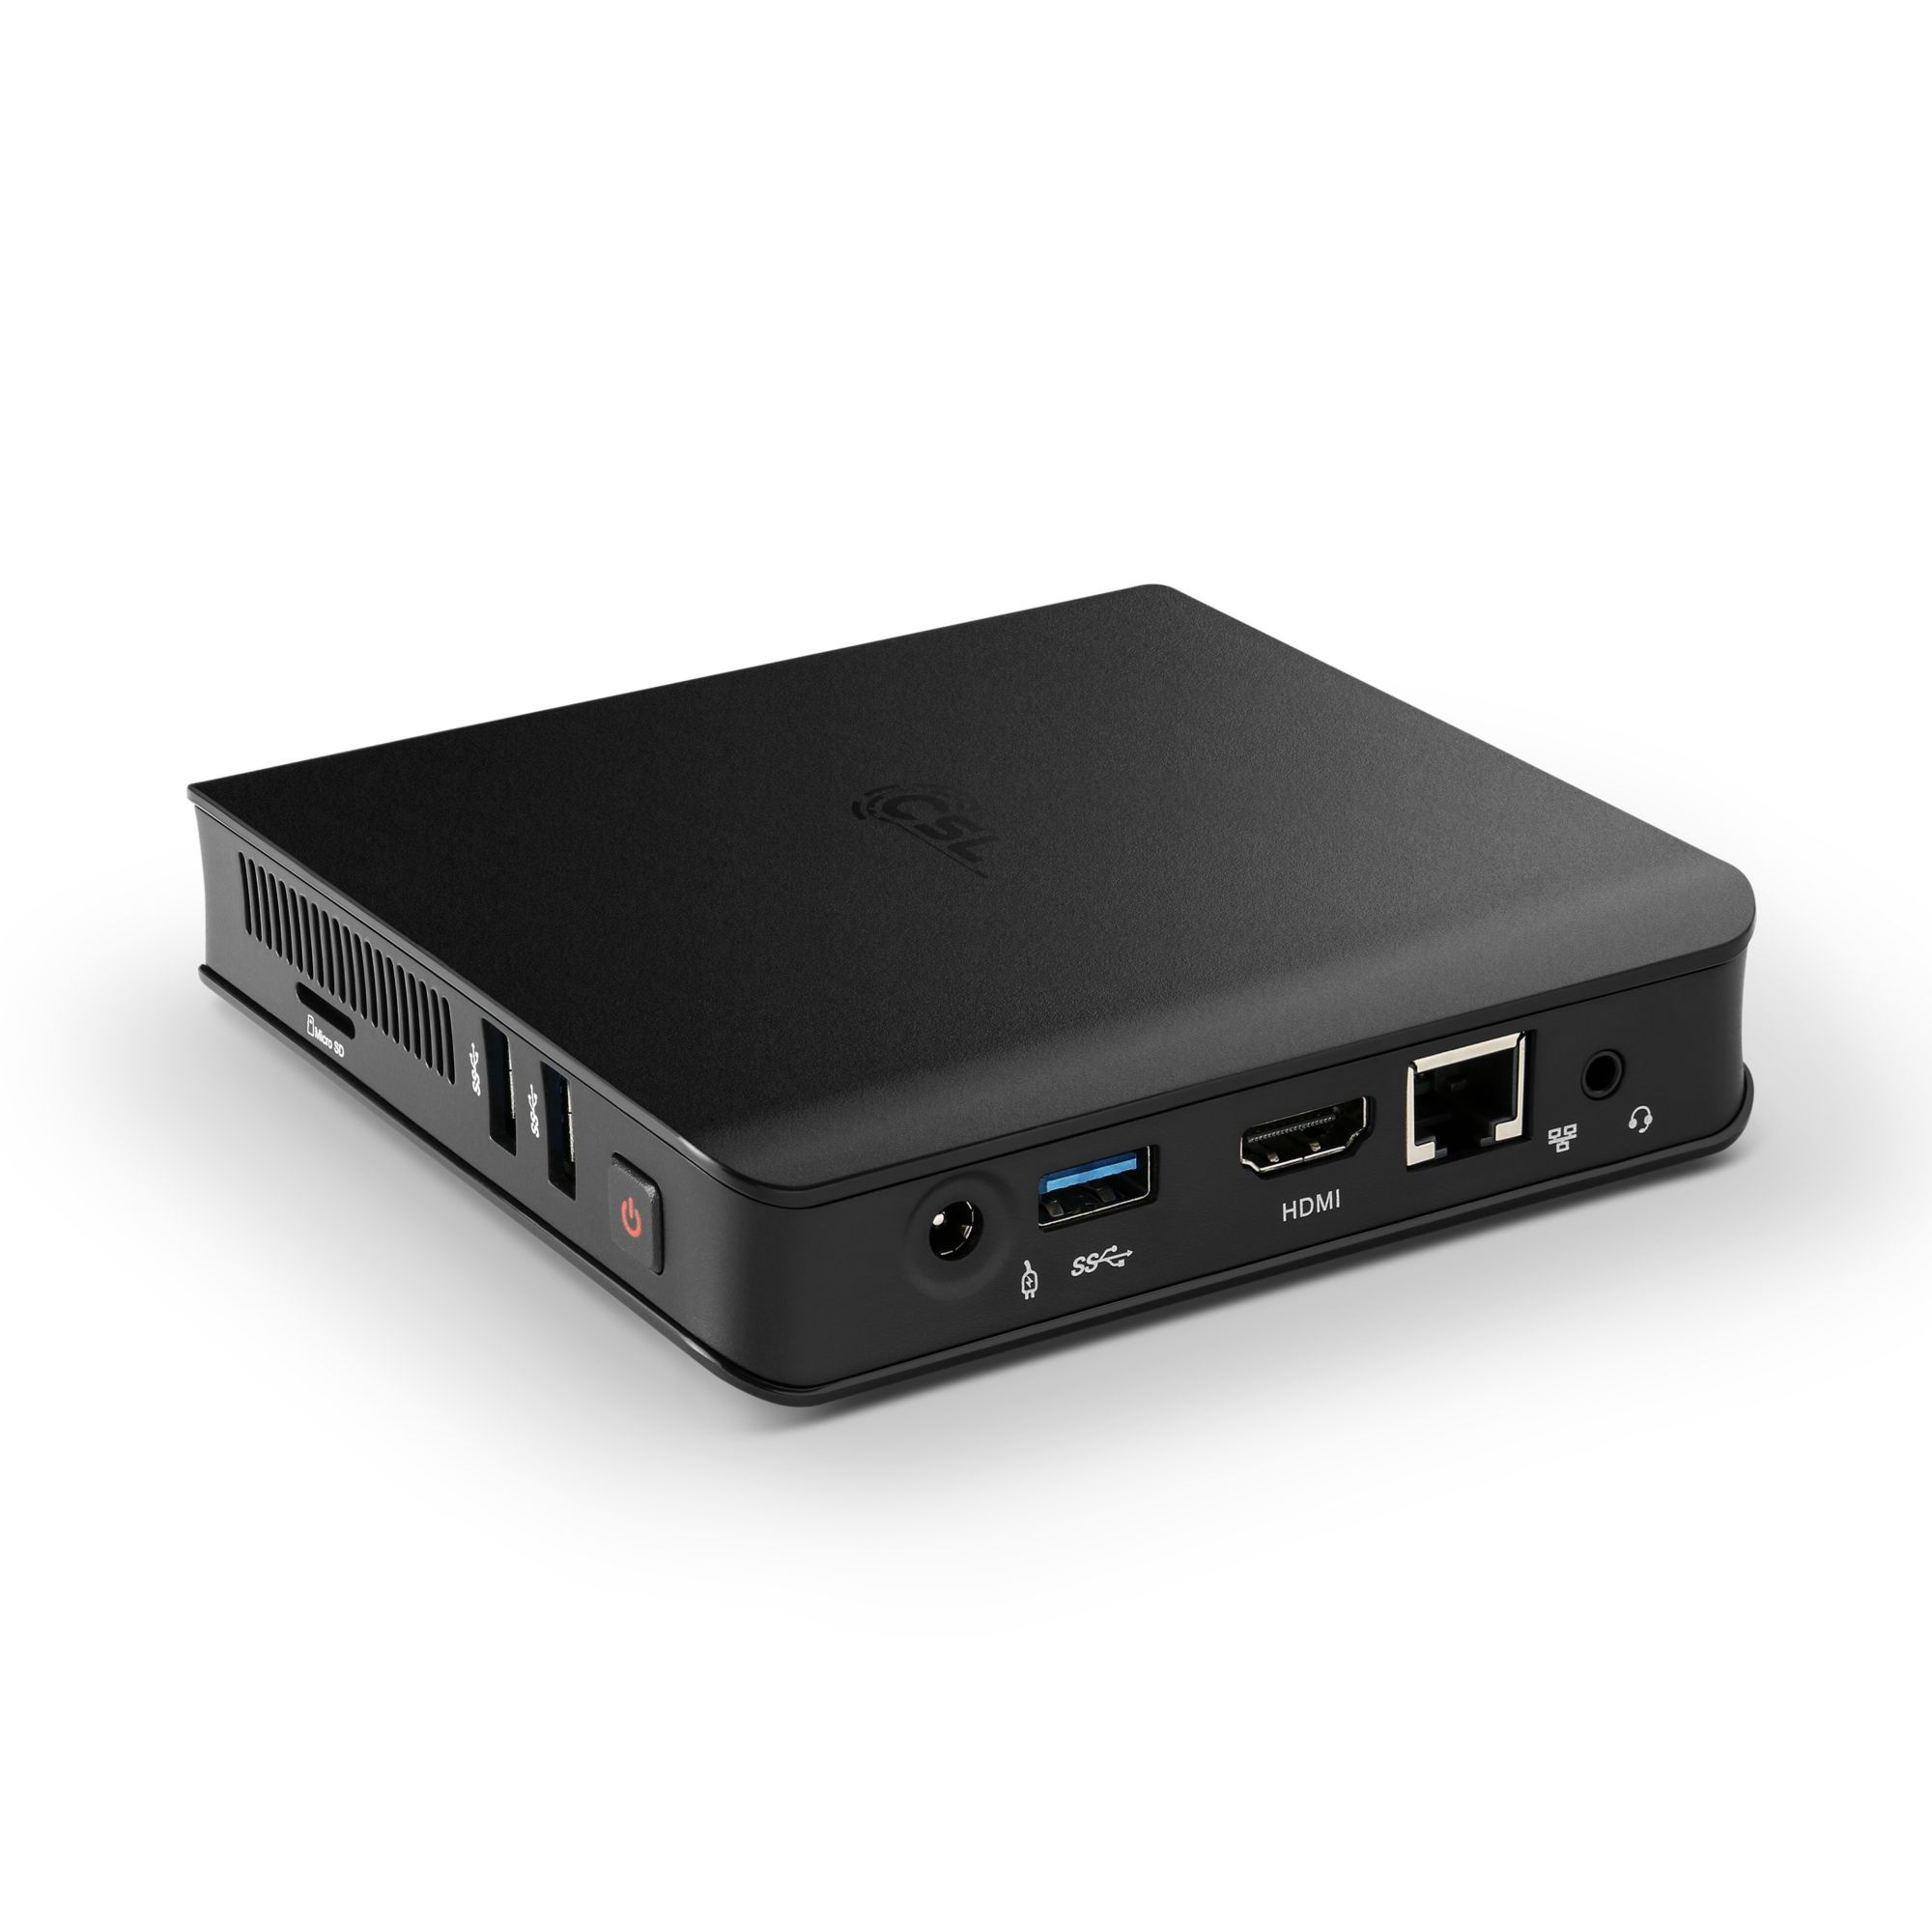 Mini v4 Ultra Win10 Cyberport eMMC Box Compact Narrow ++ CSL Celeron HD PC 4GB/128GB N4120